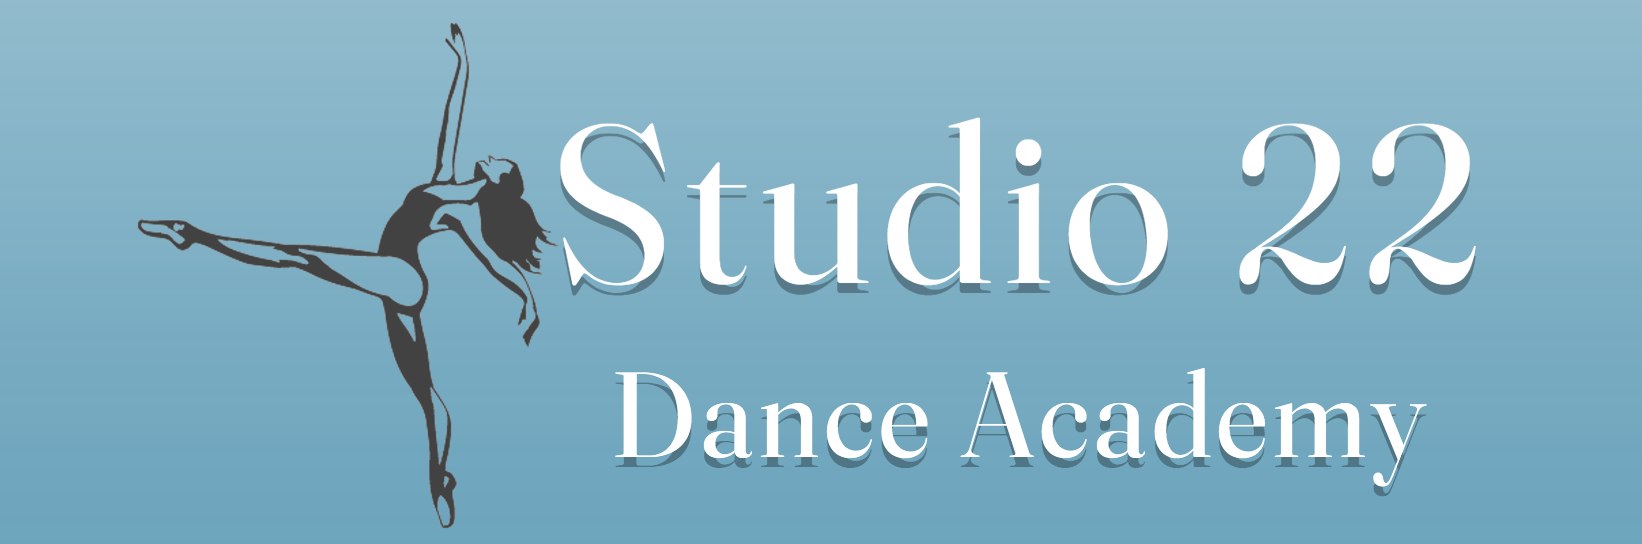 Studio 22 Dance Academy